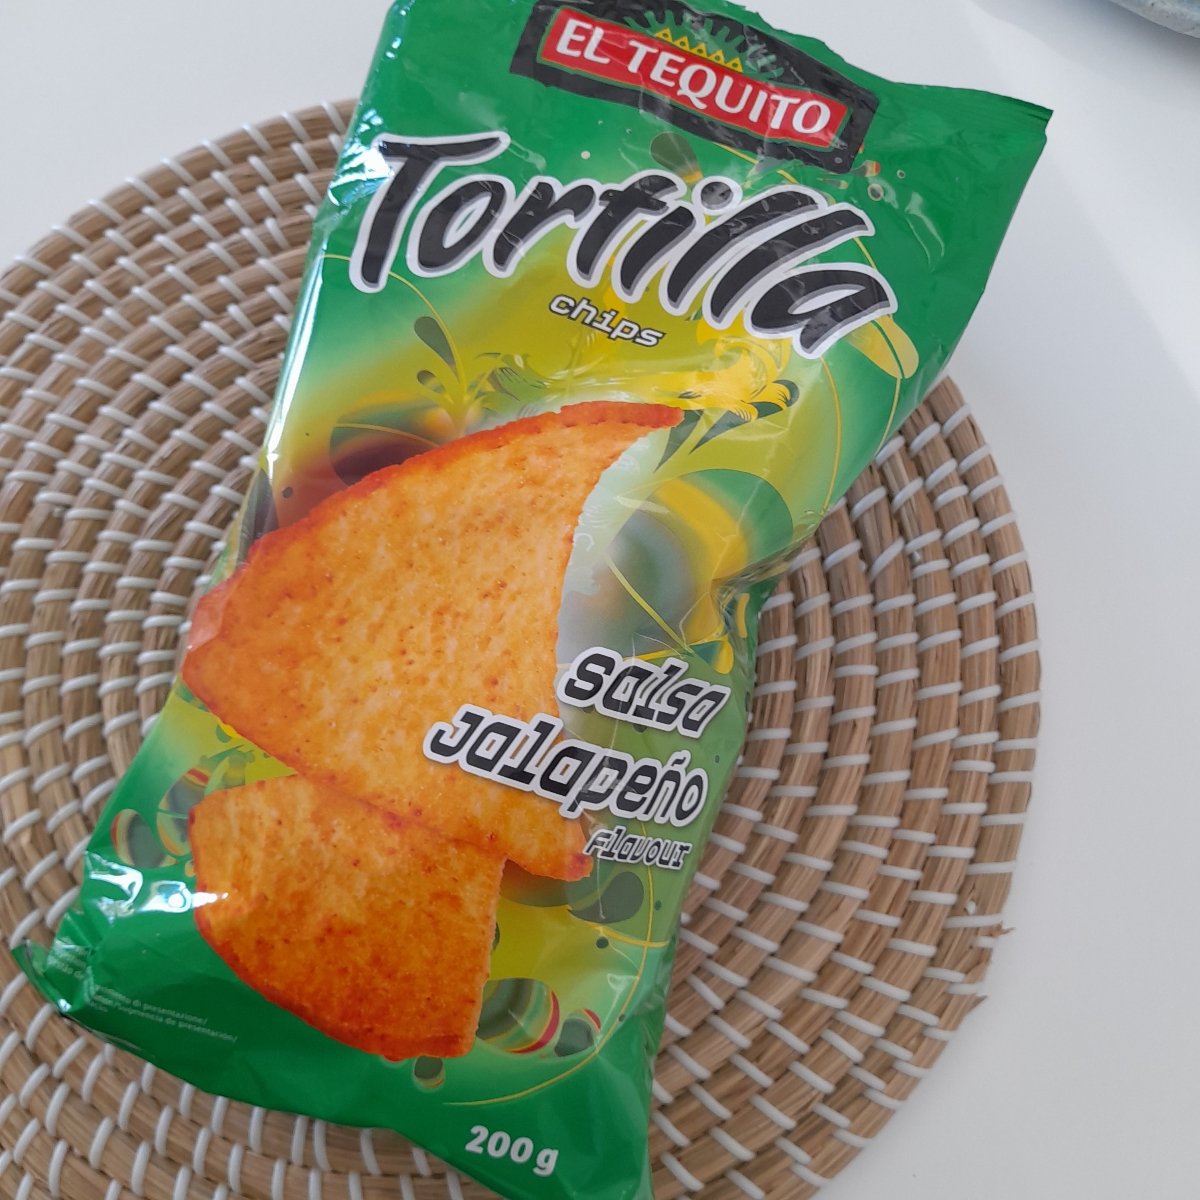 El Tequito Reviews jalapeño abillion salsa | Tortilla